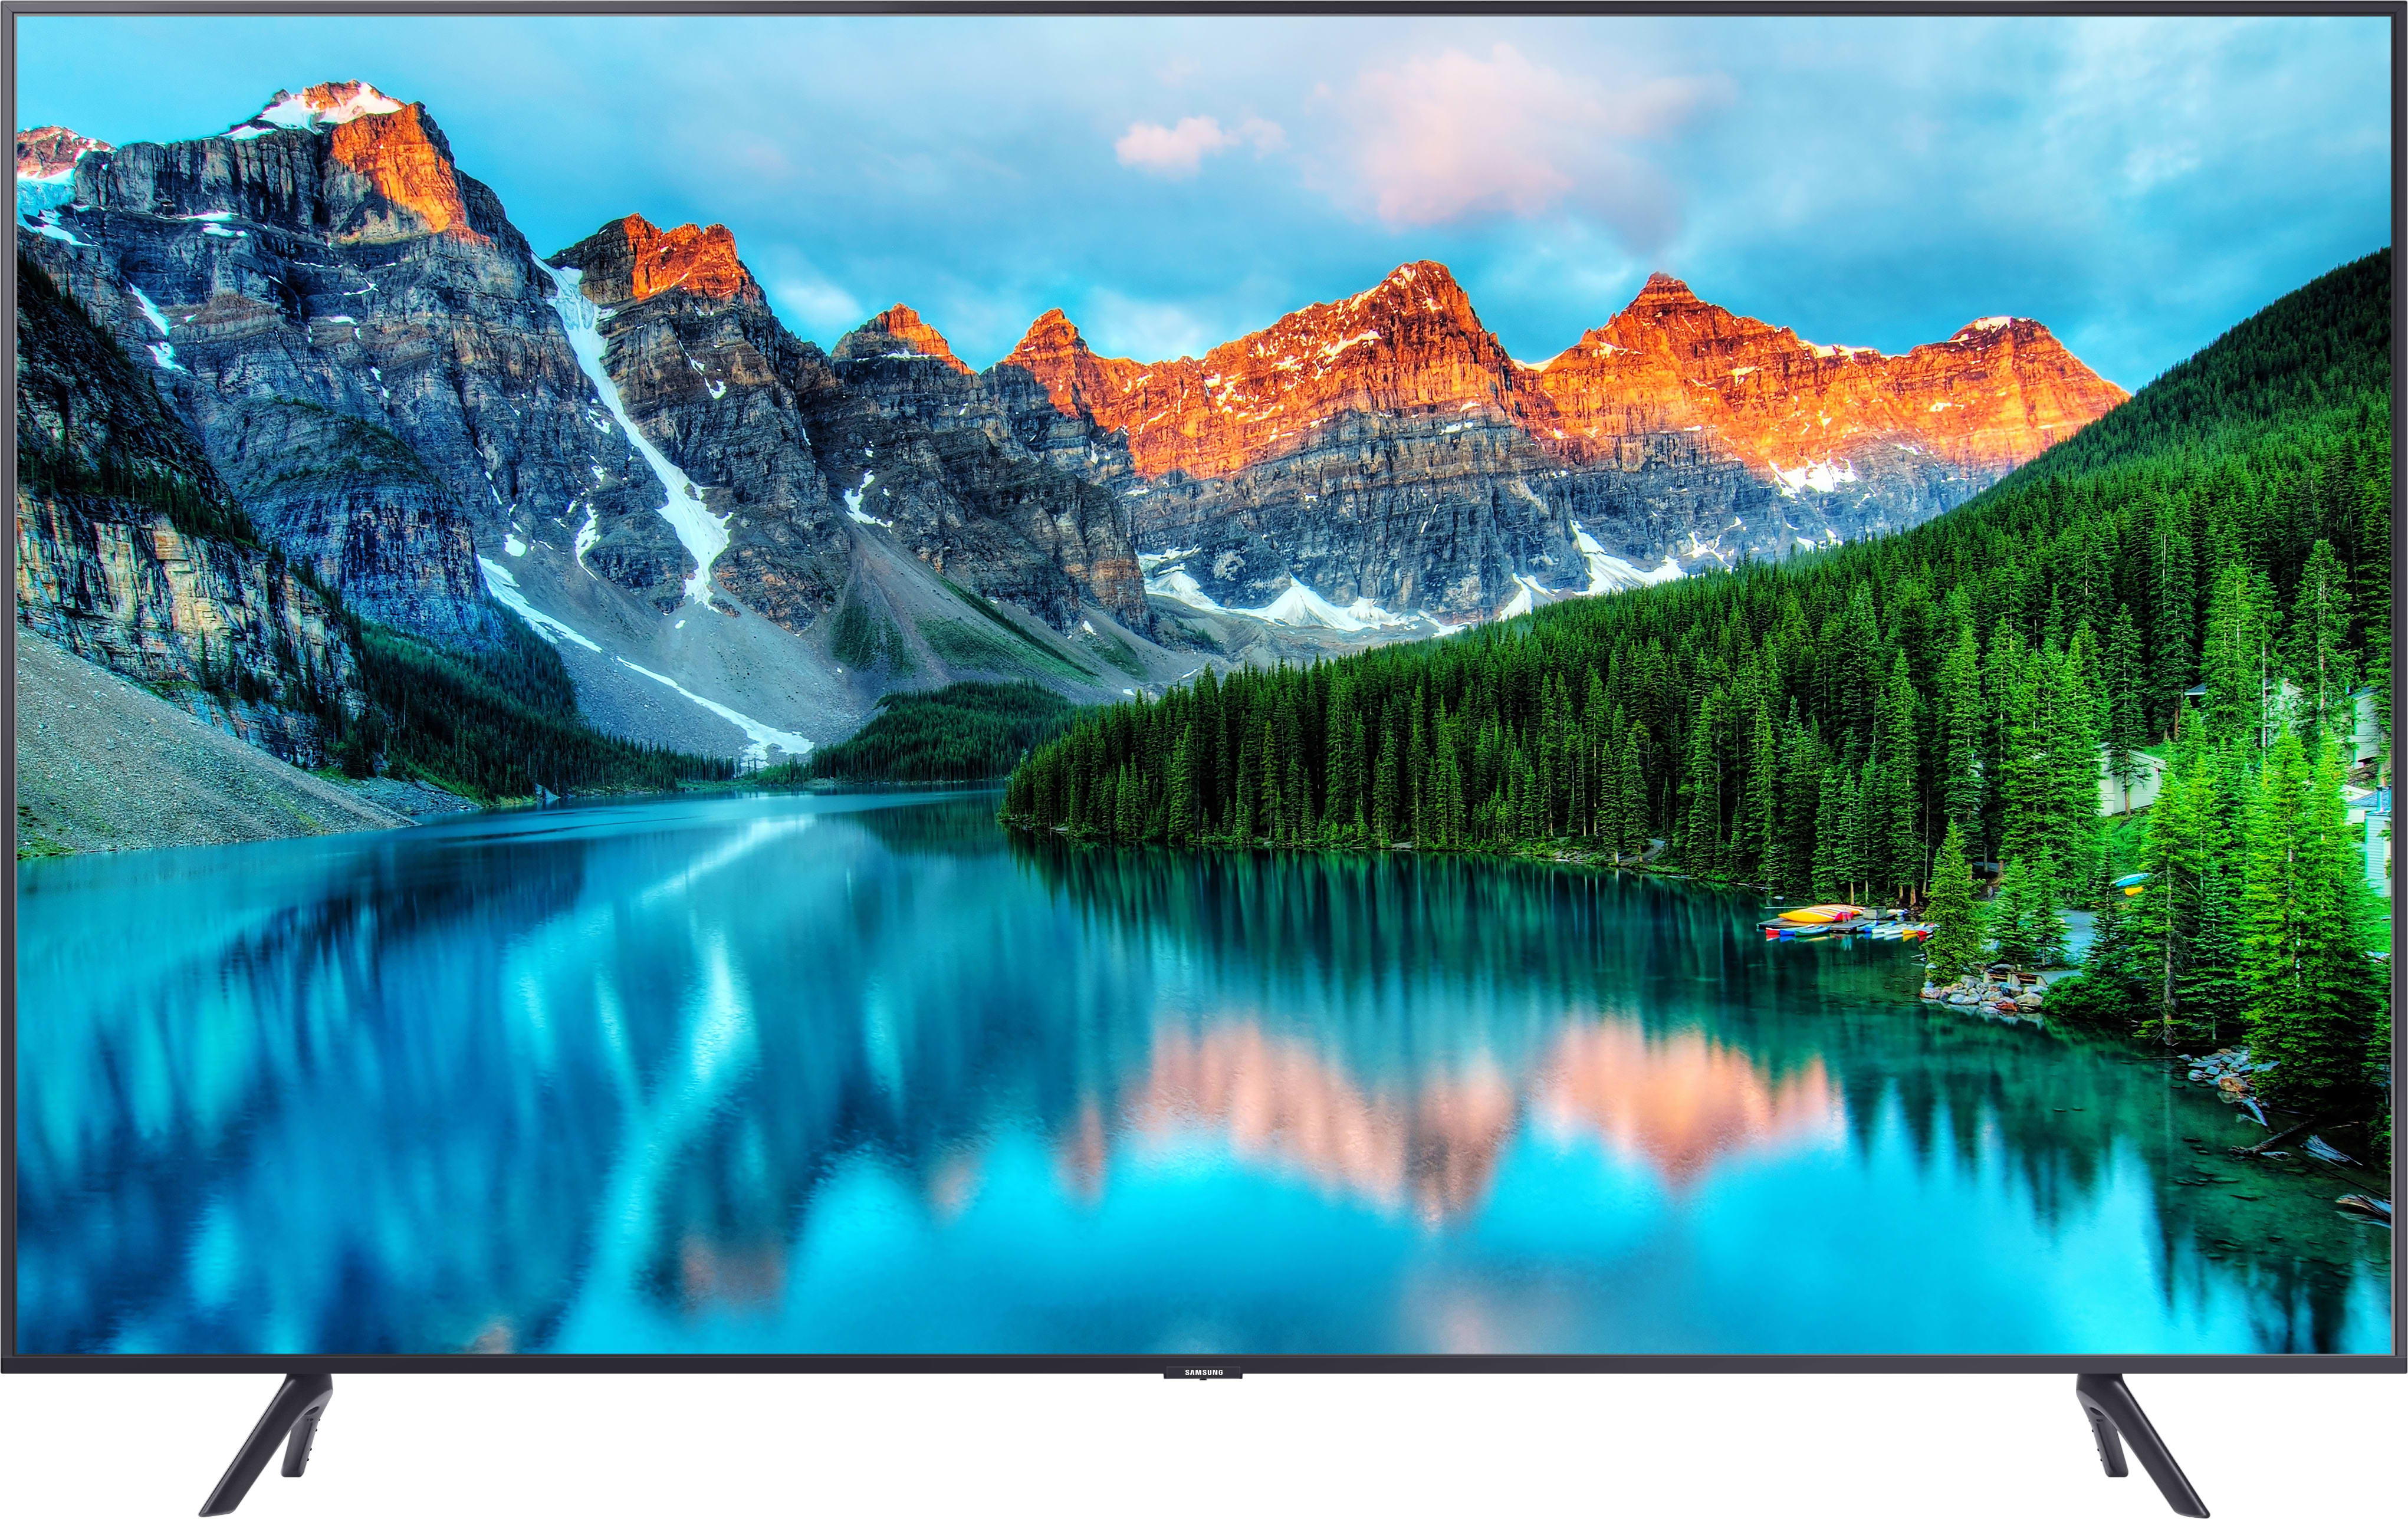 Samsung BET-H Series Crystal UHD 4K Pro TV